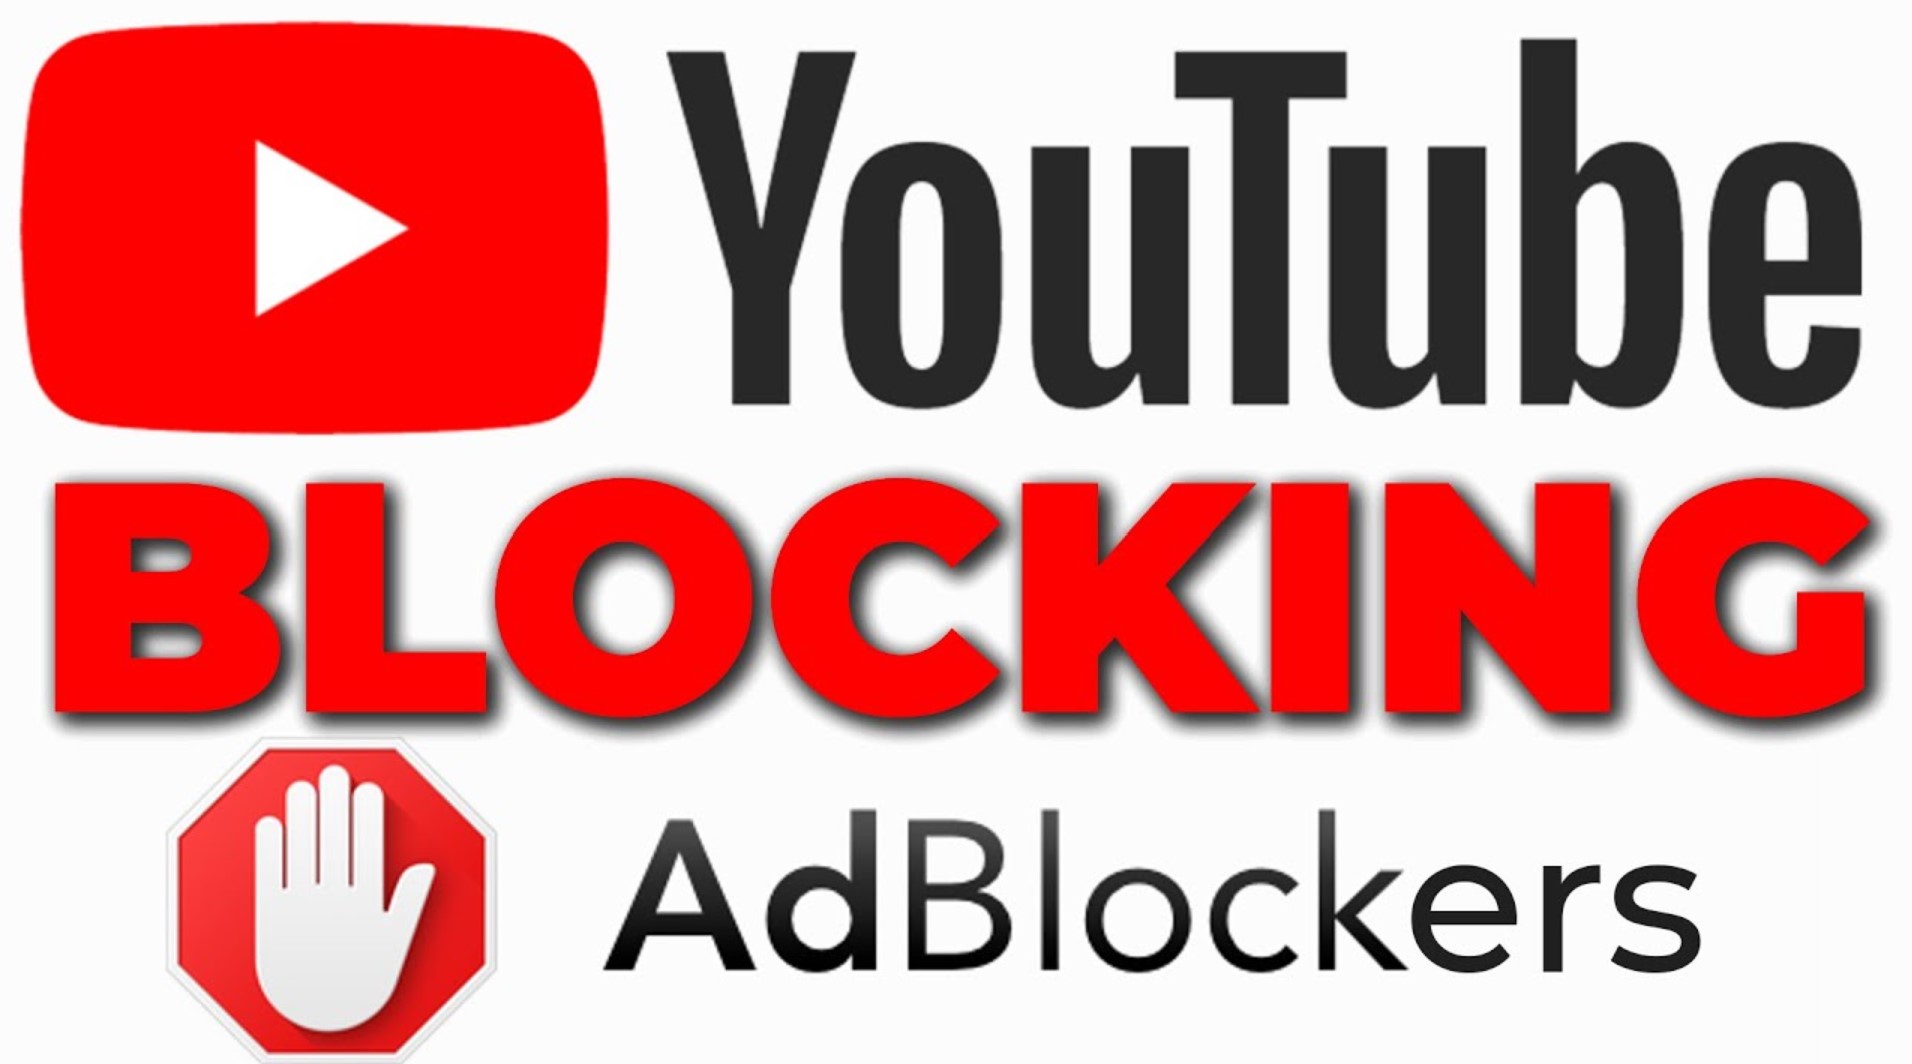 YouTube blocks ad blocker scams – Go Premium instead (safety)